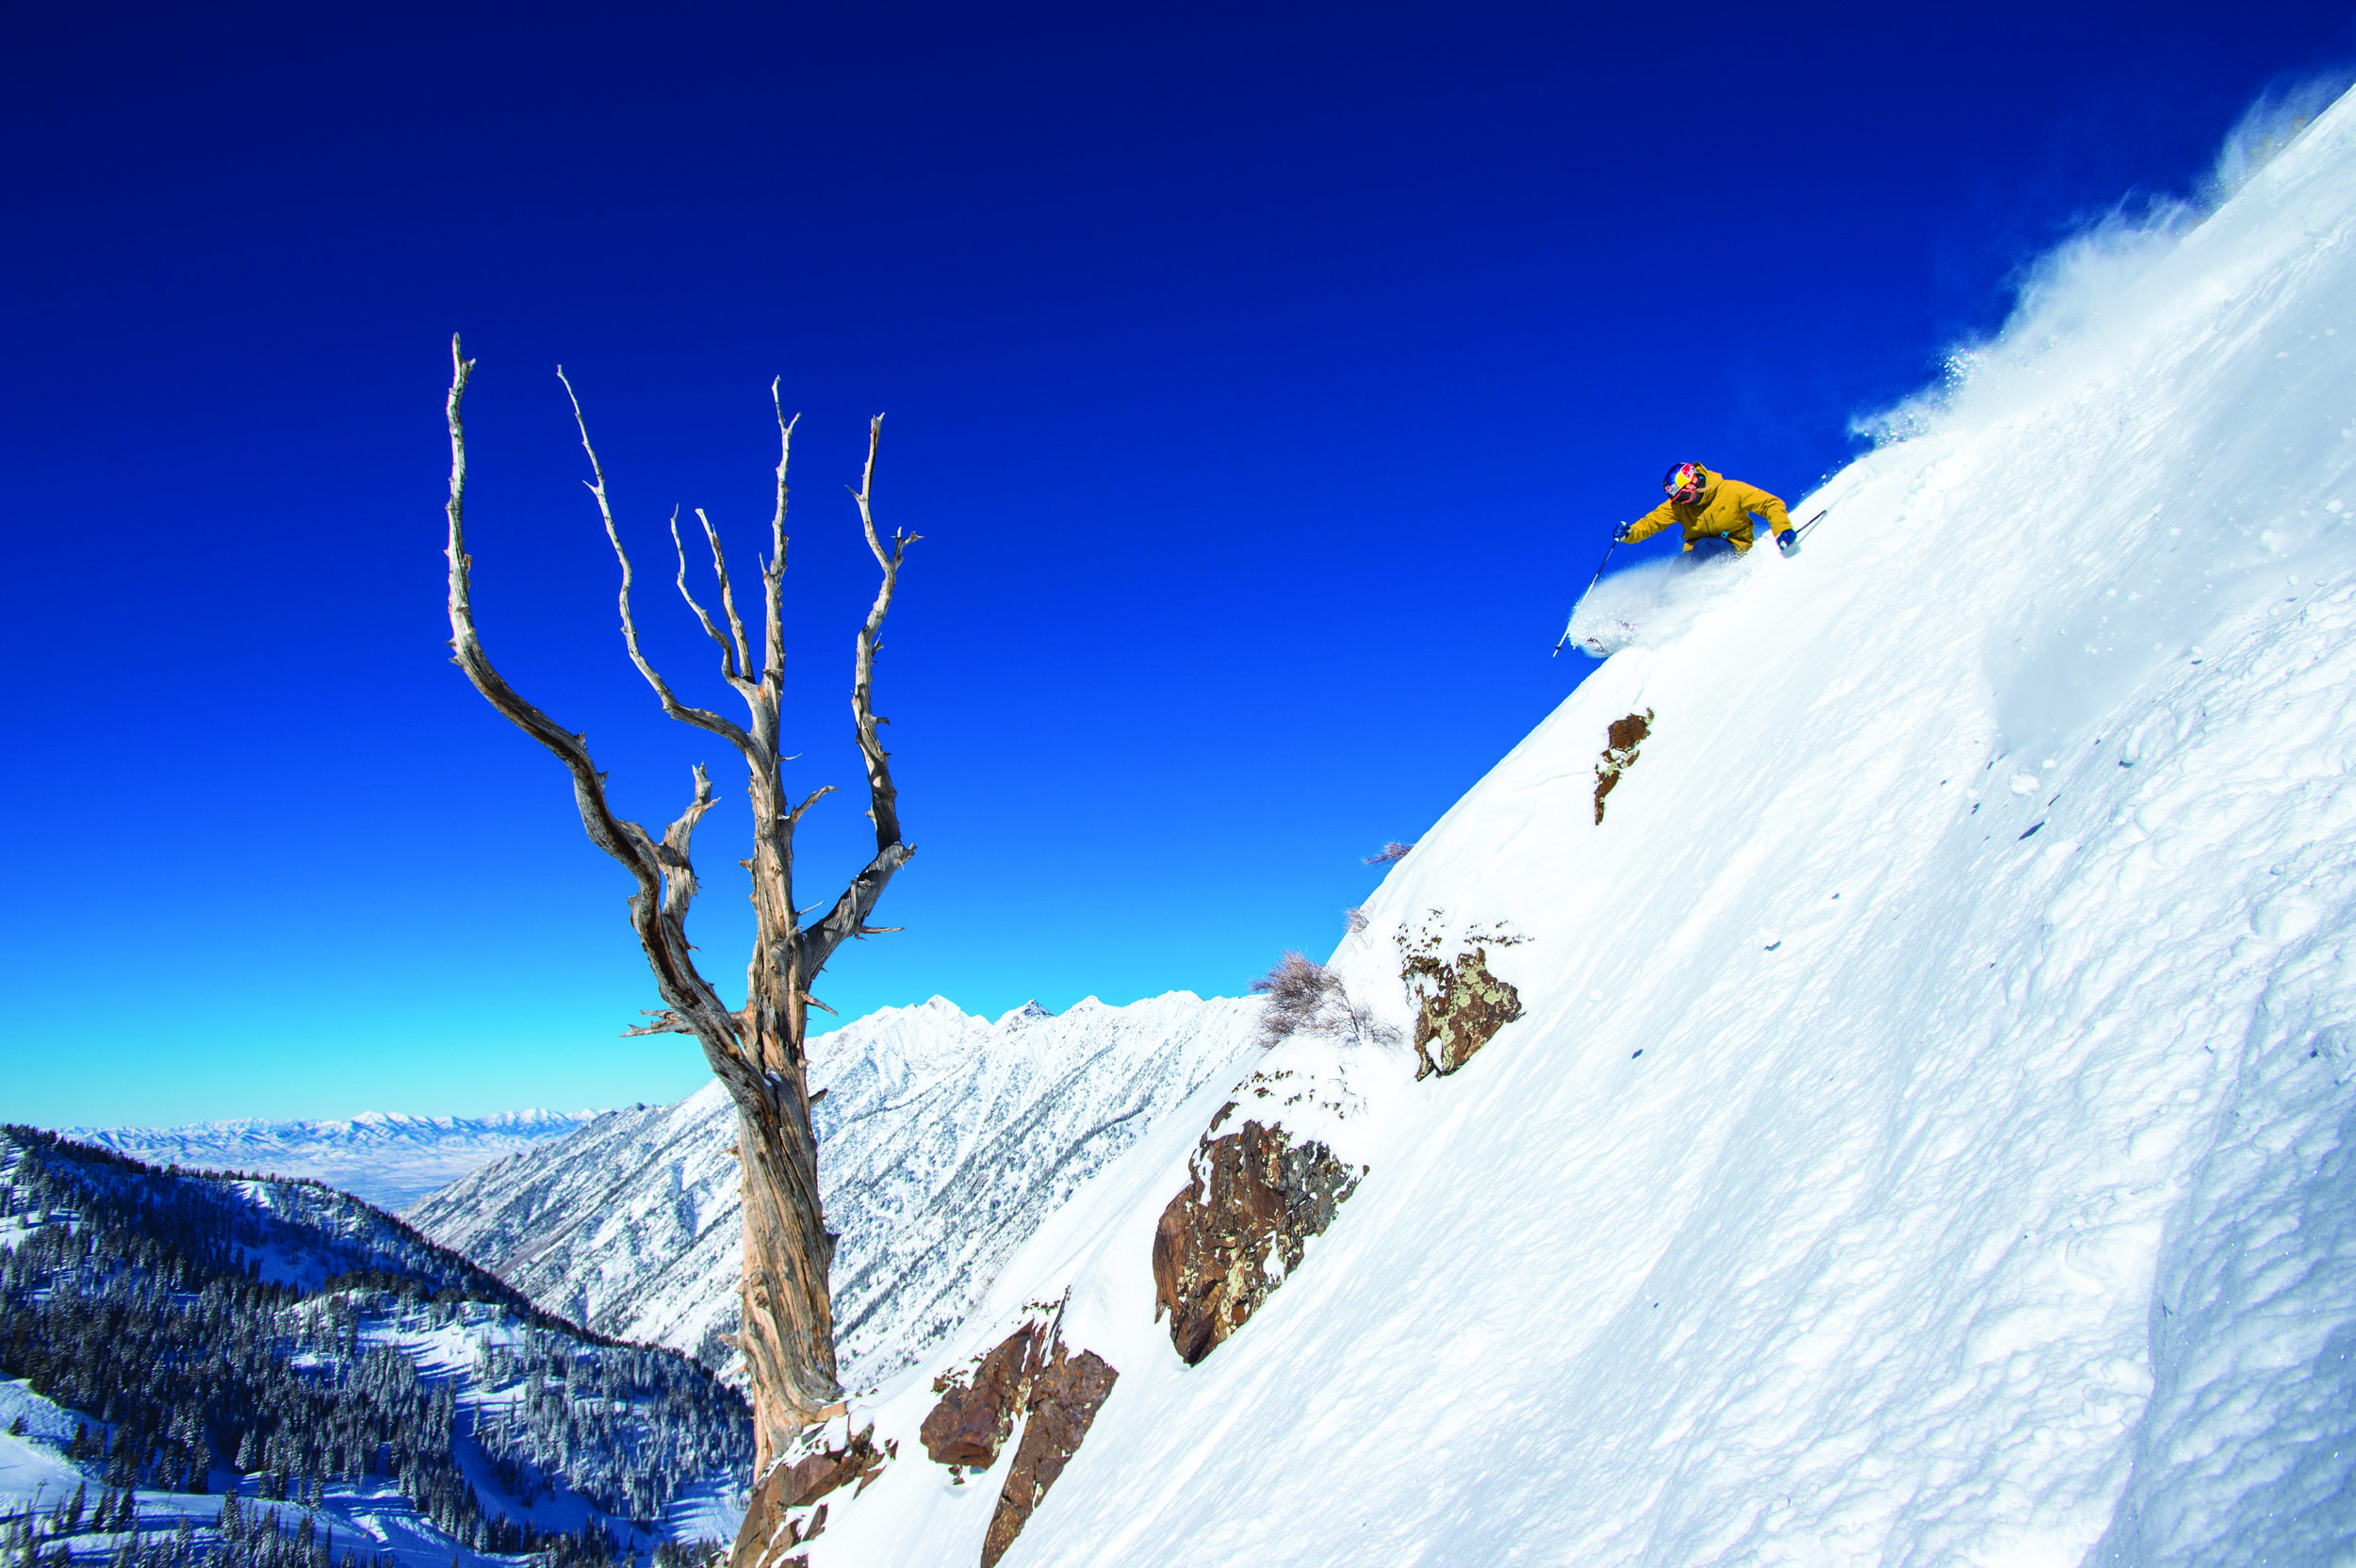   Johnny Collinson shreds at Snowbird Ski Resort.&nbsp;Photo: Scott Markewitz Photography  